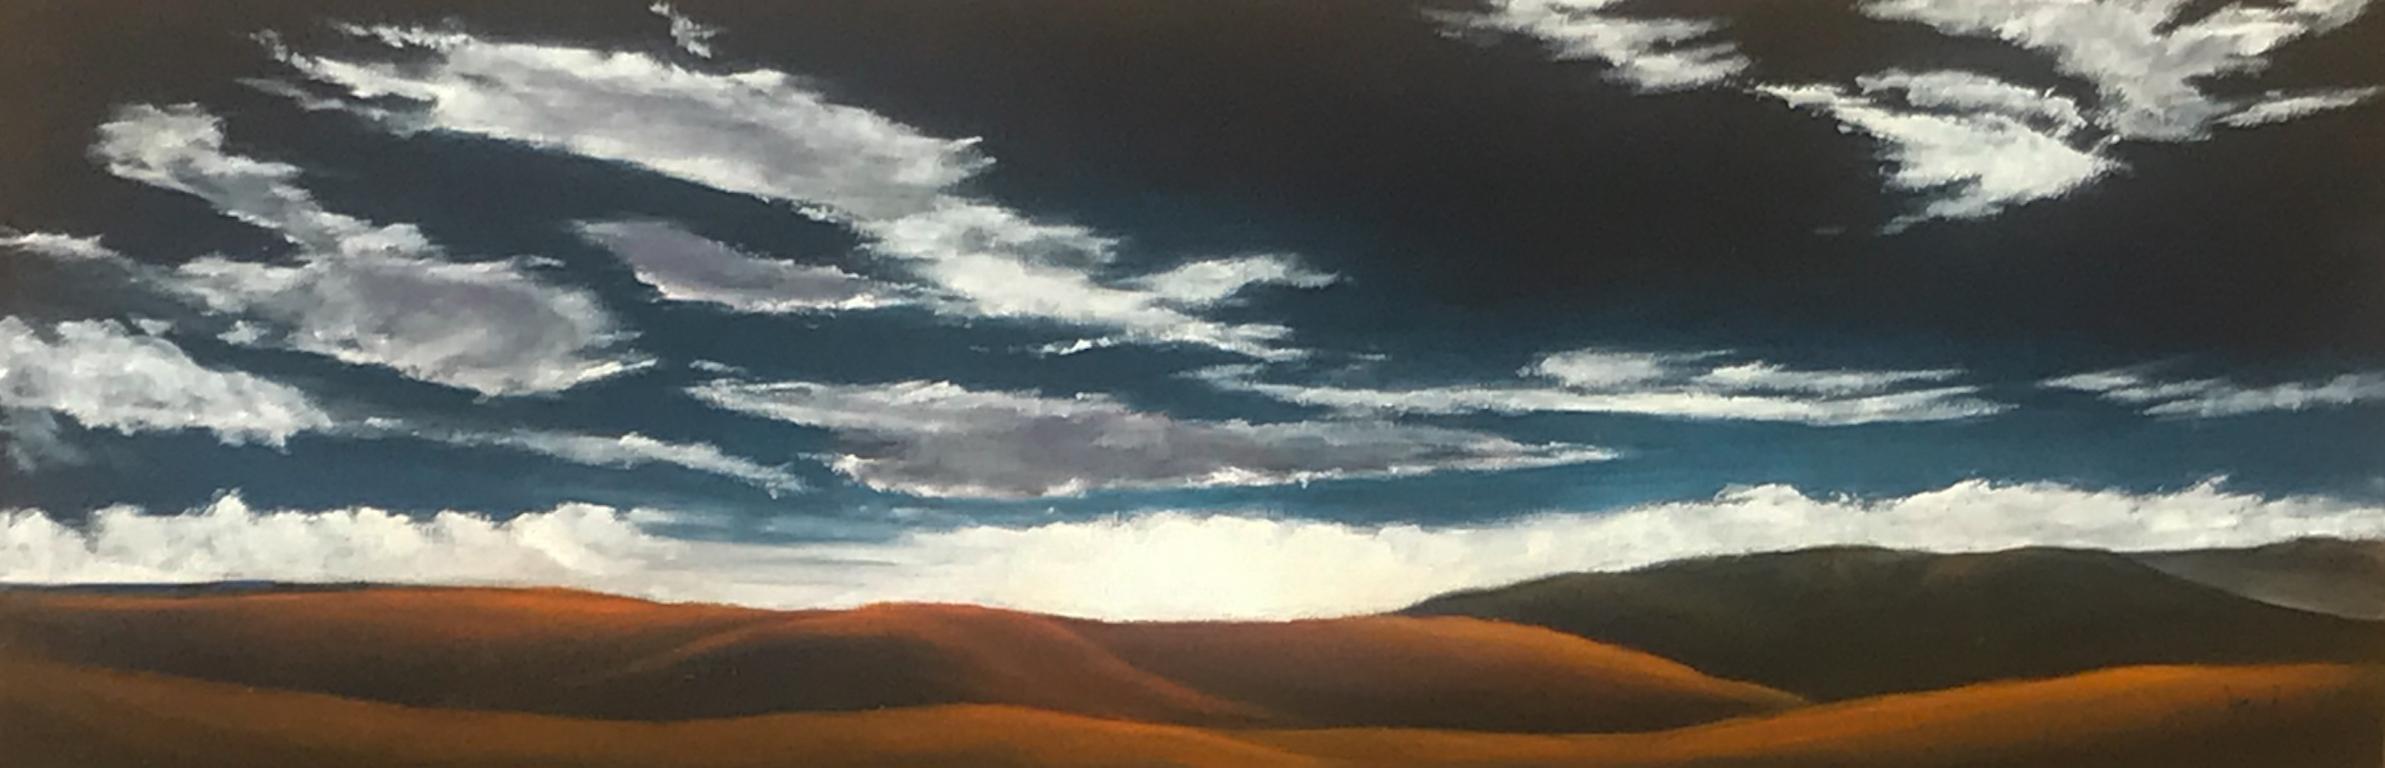 Golden Hills XXIV, Oil Painting - Art by Mandy Main